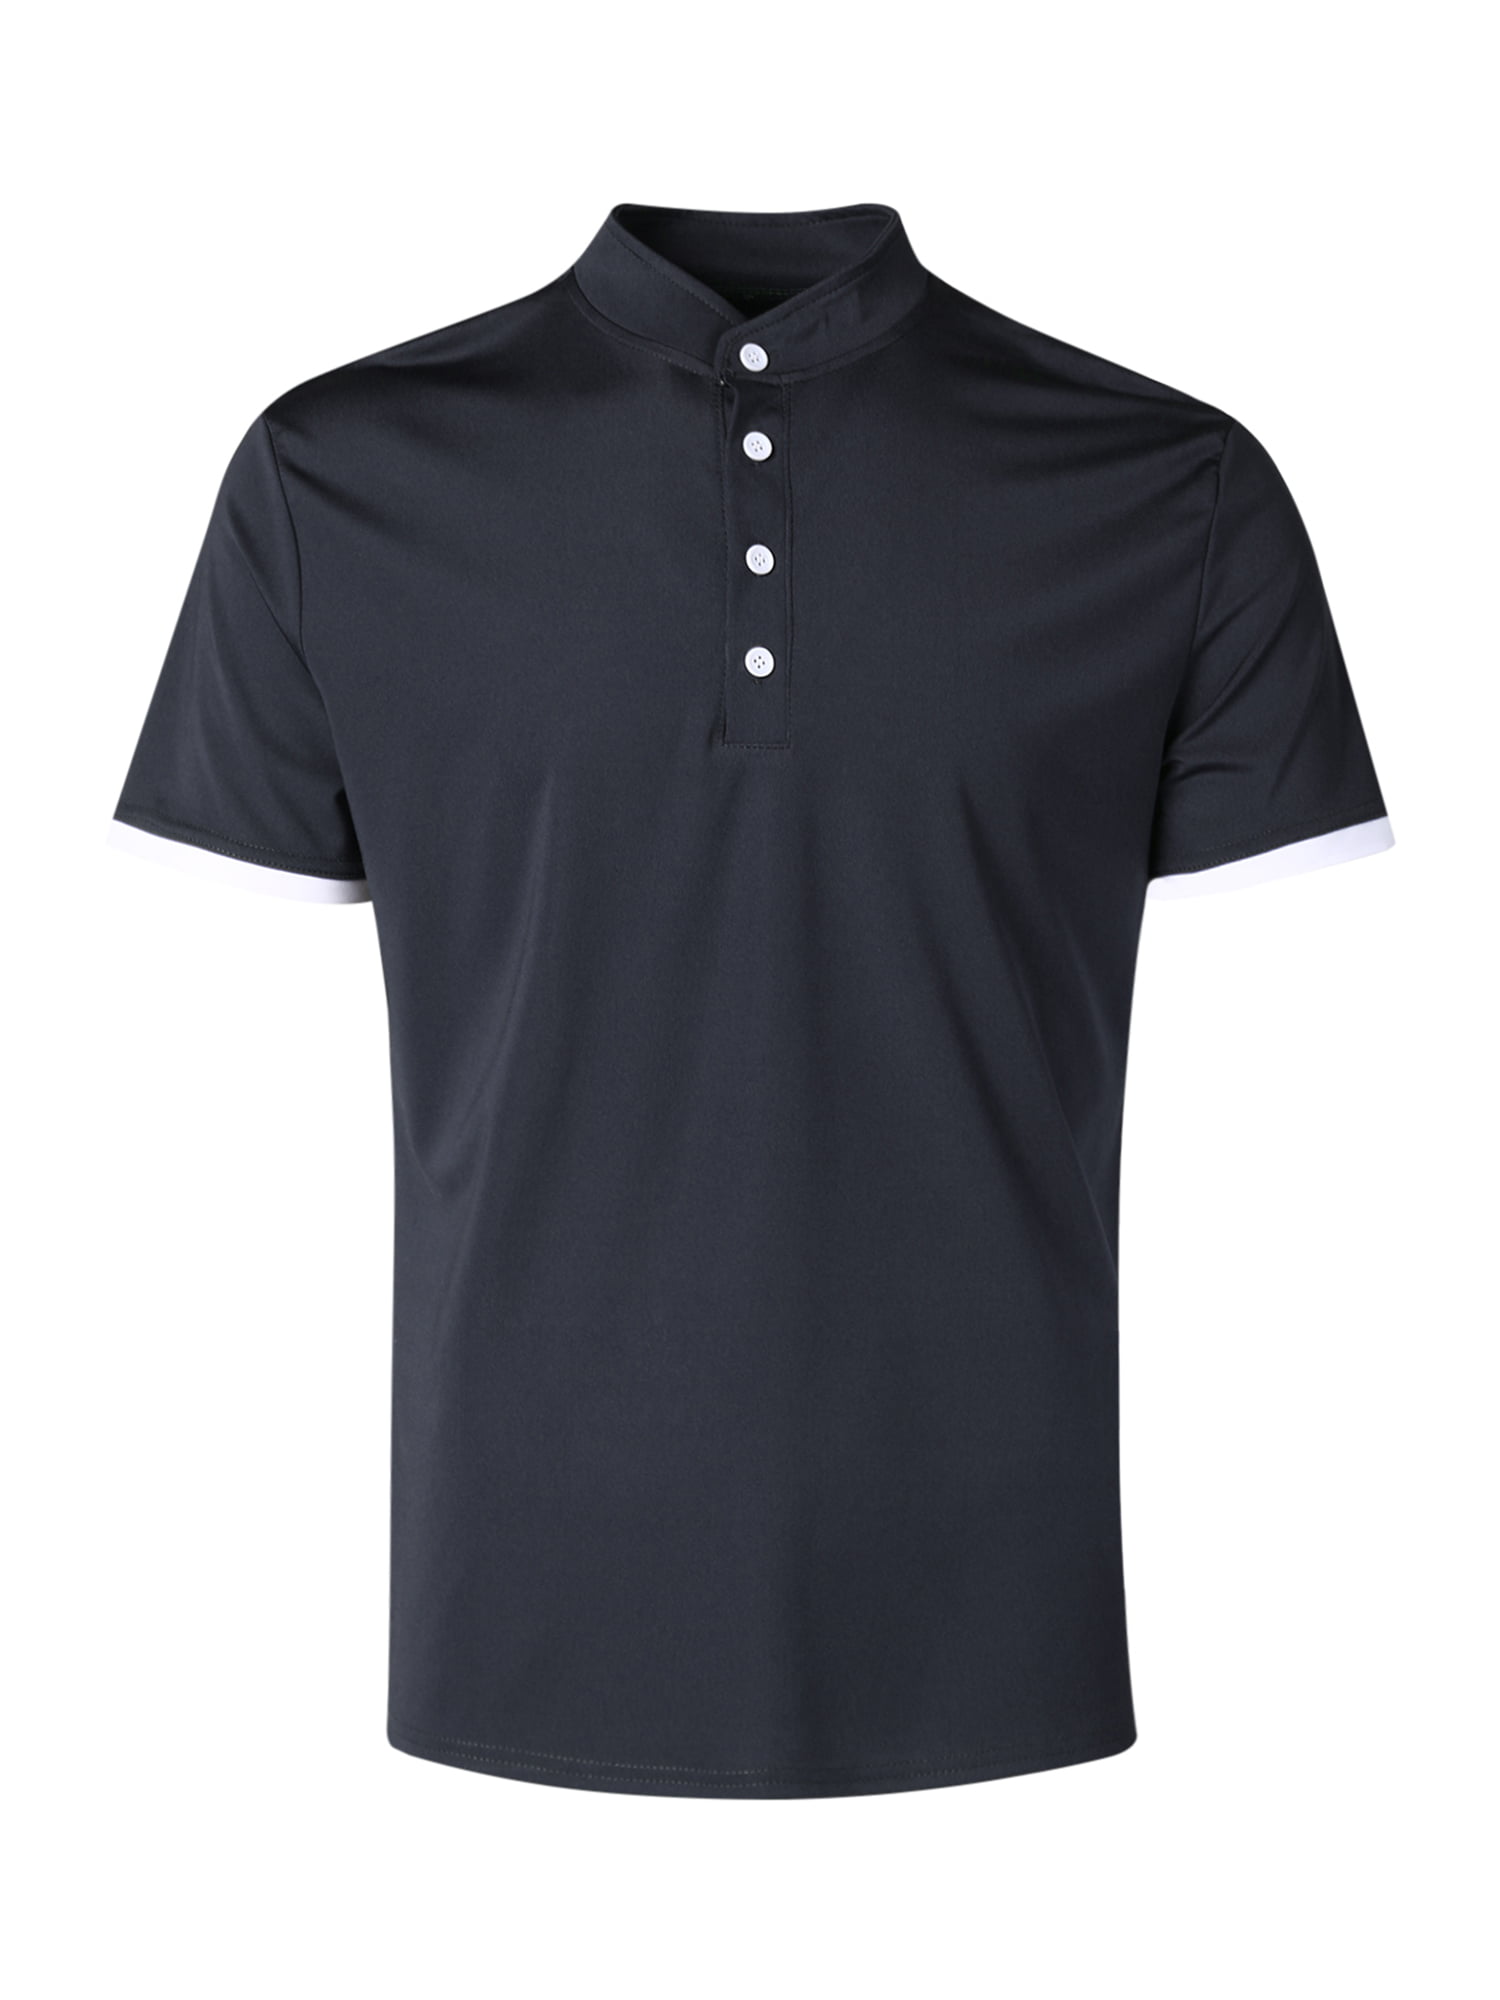 Bebiullo Men's Polo Solid Color Shirts Short Sleeve Button Down Summer ...